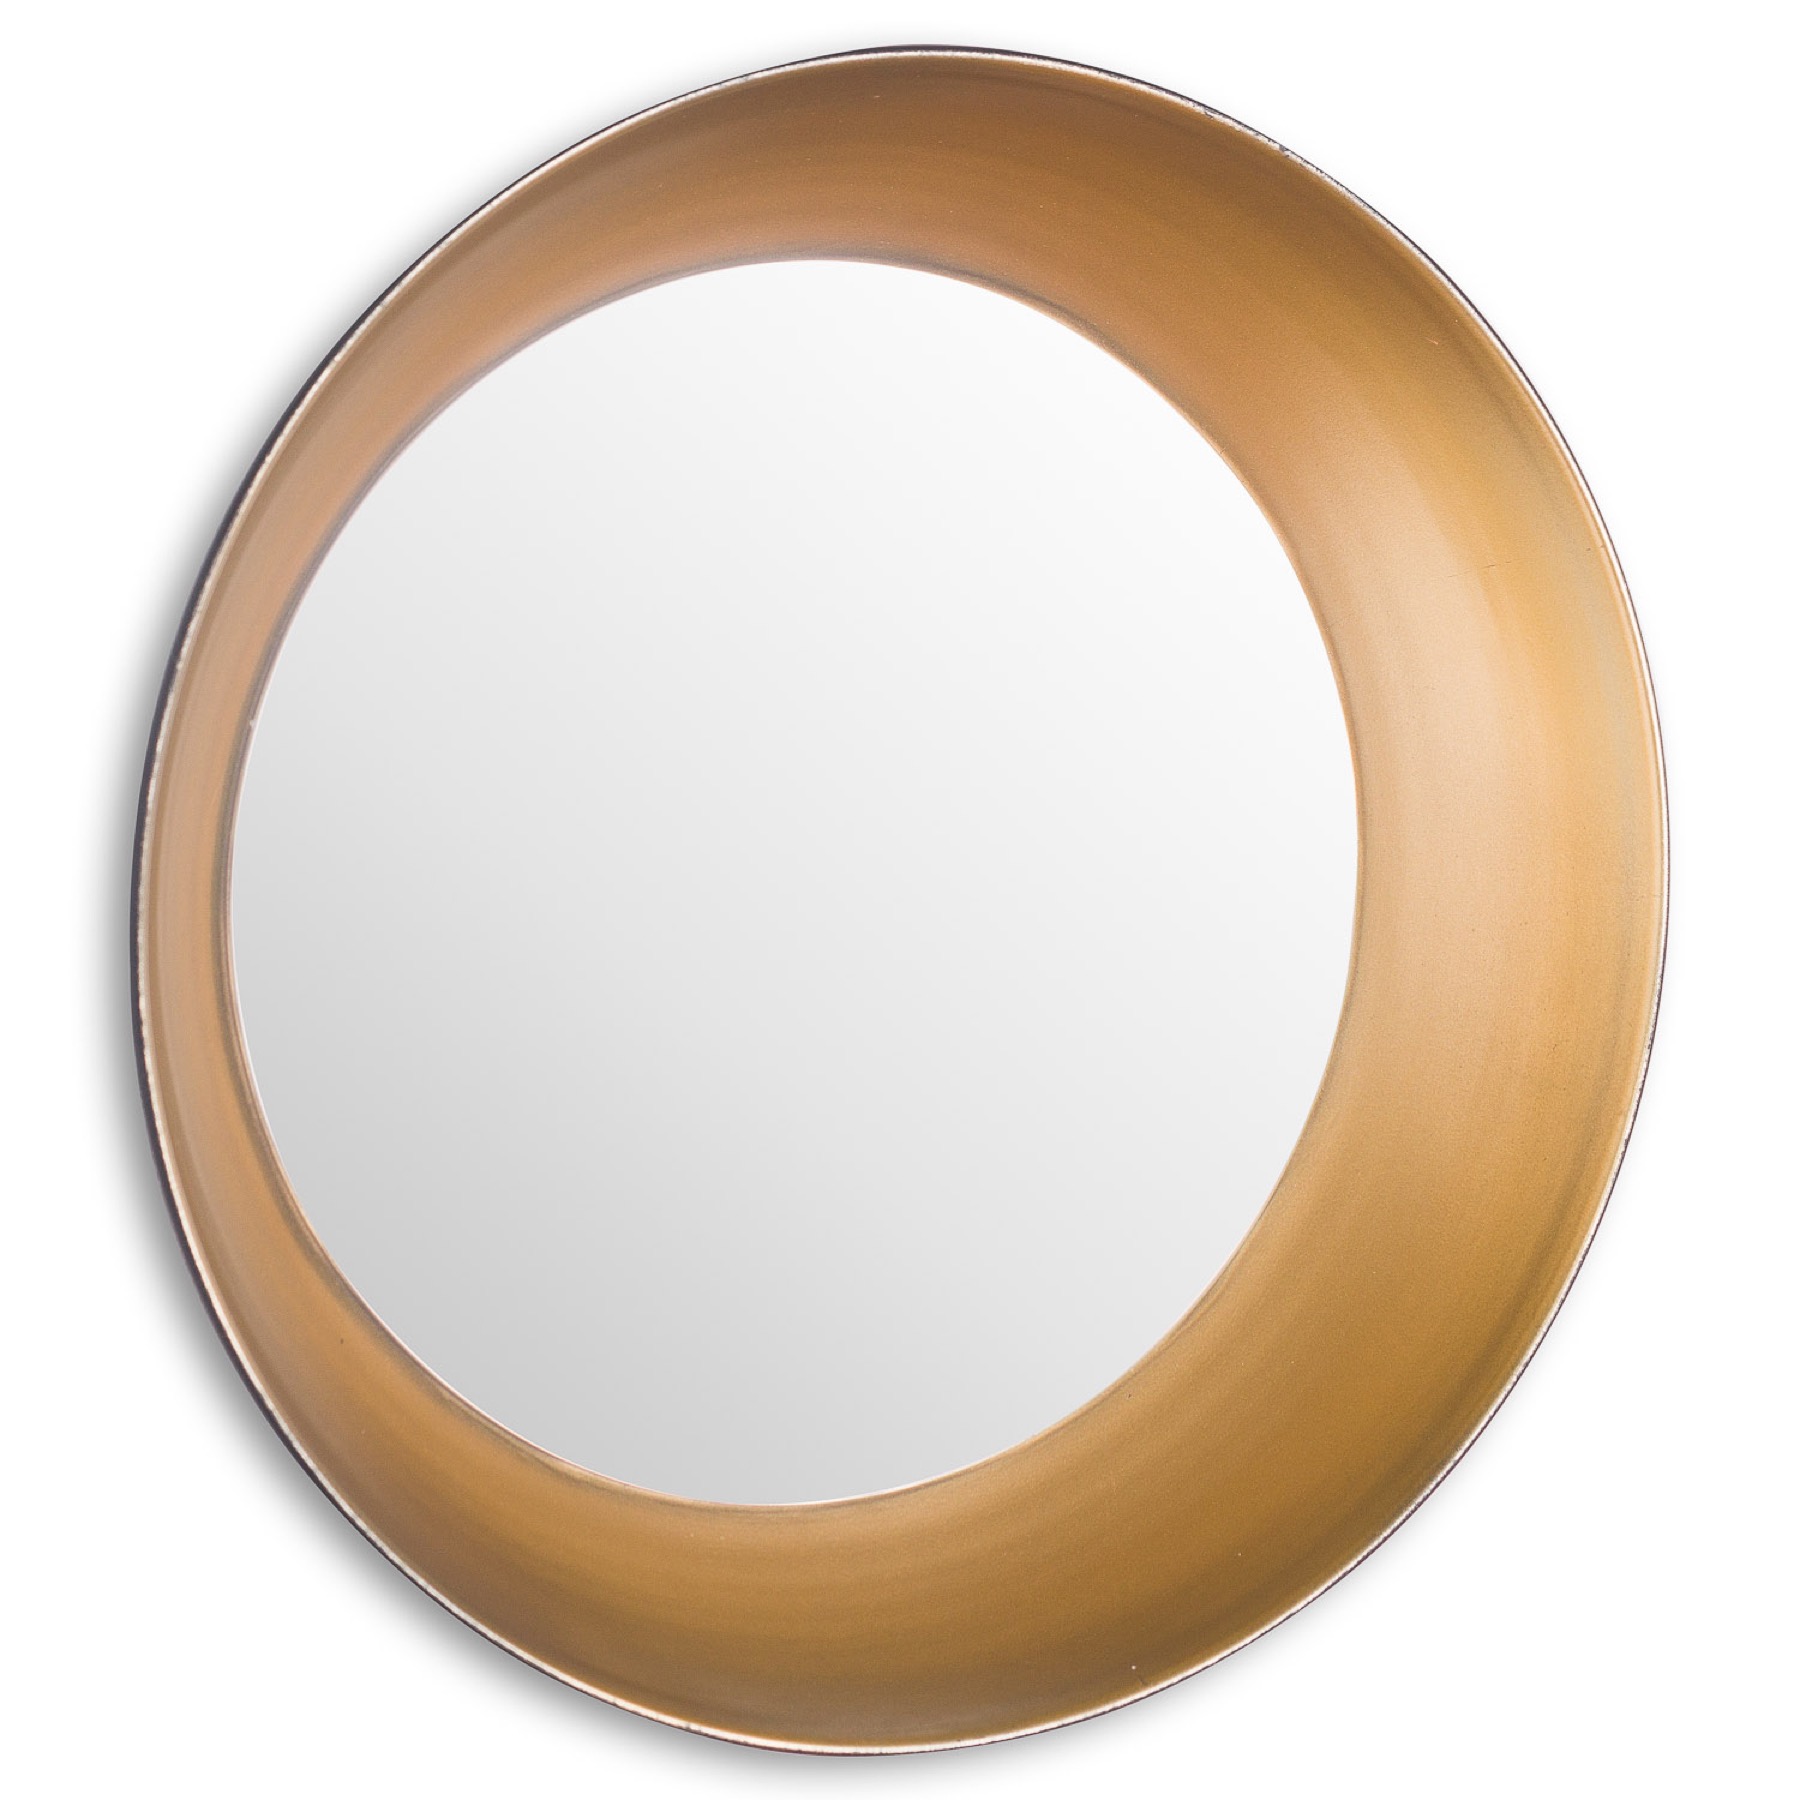 Devant Small Gold Rimmed Mirror - Image 1